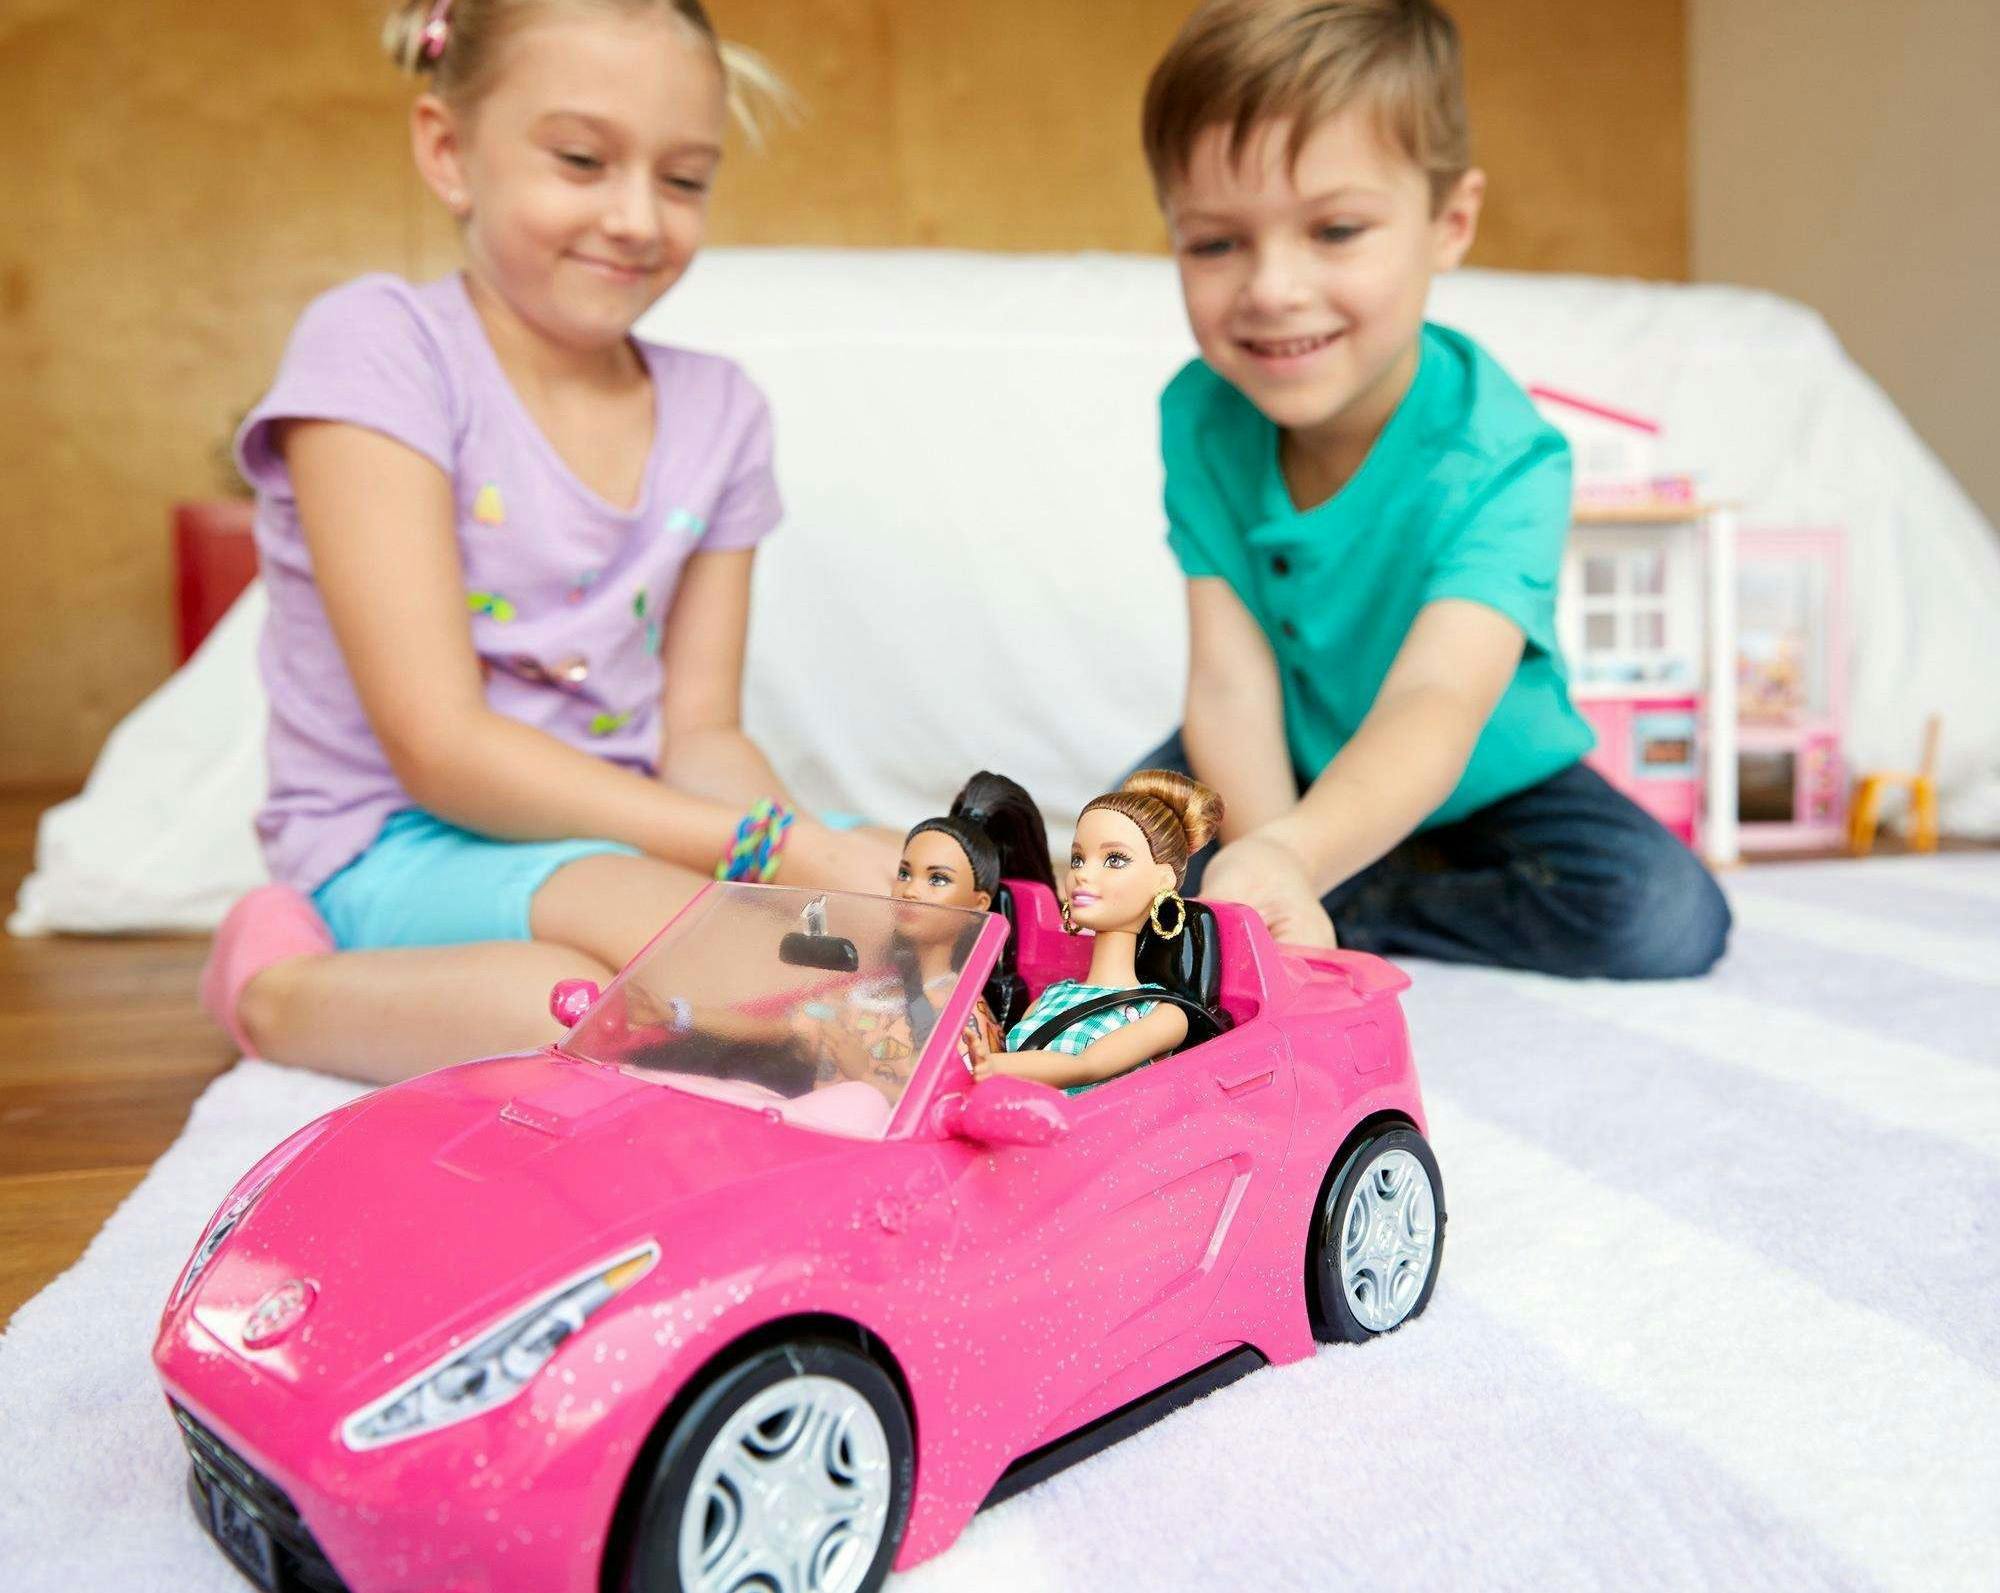 barbie vehicles walmart